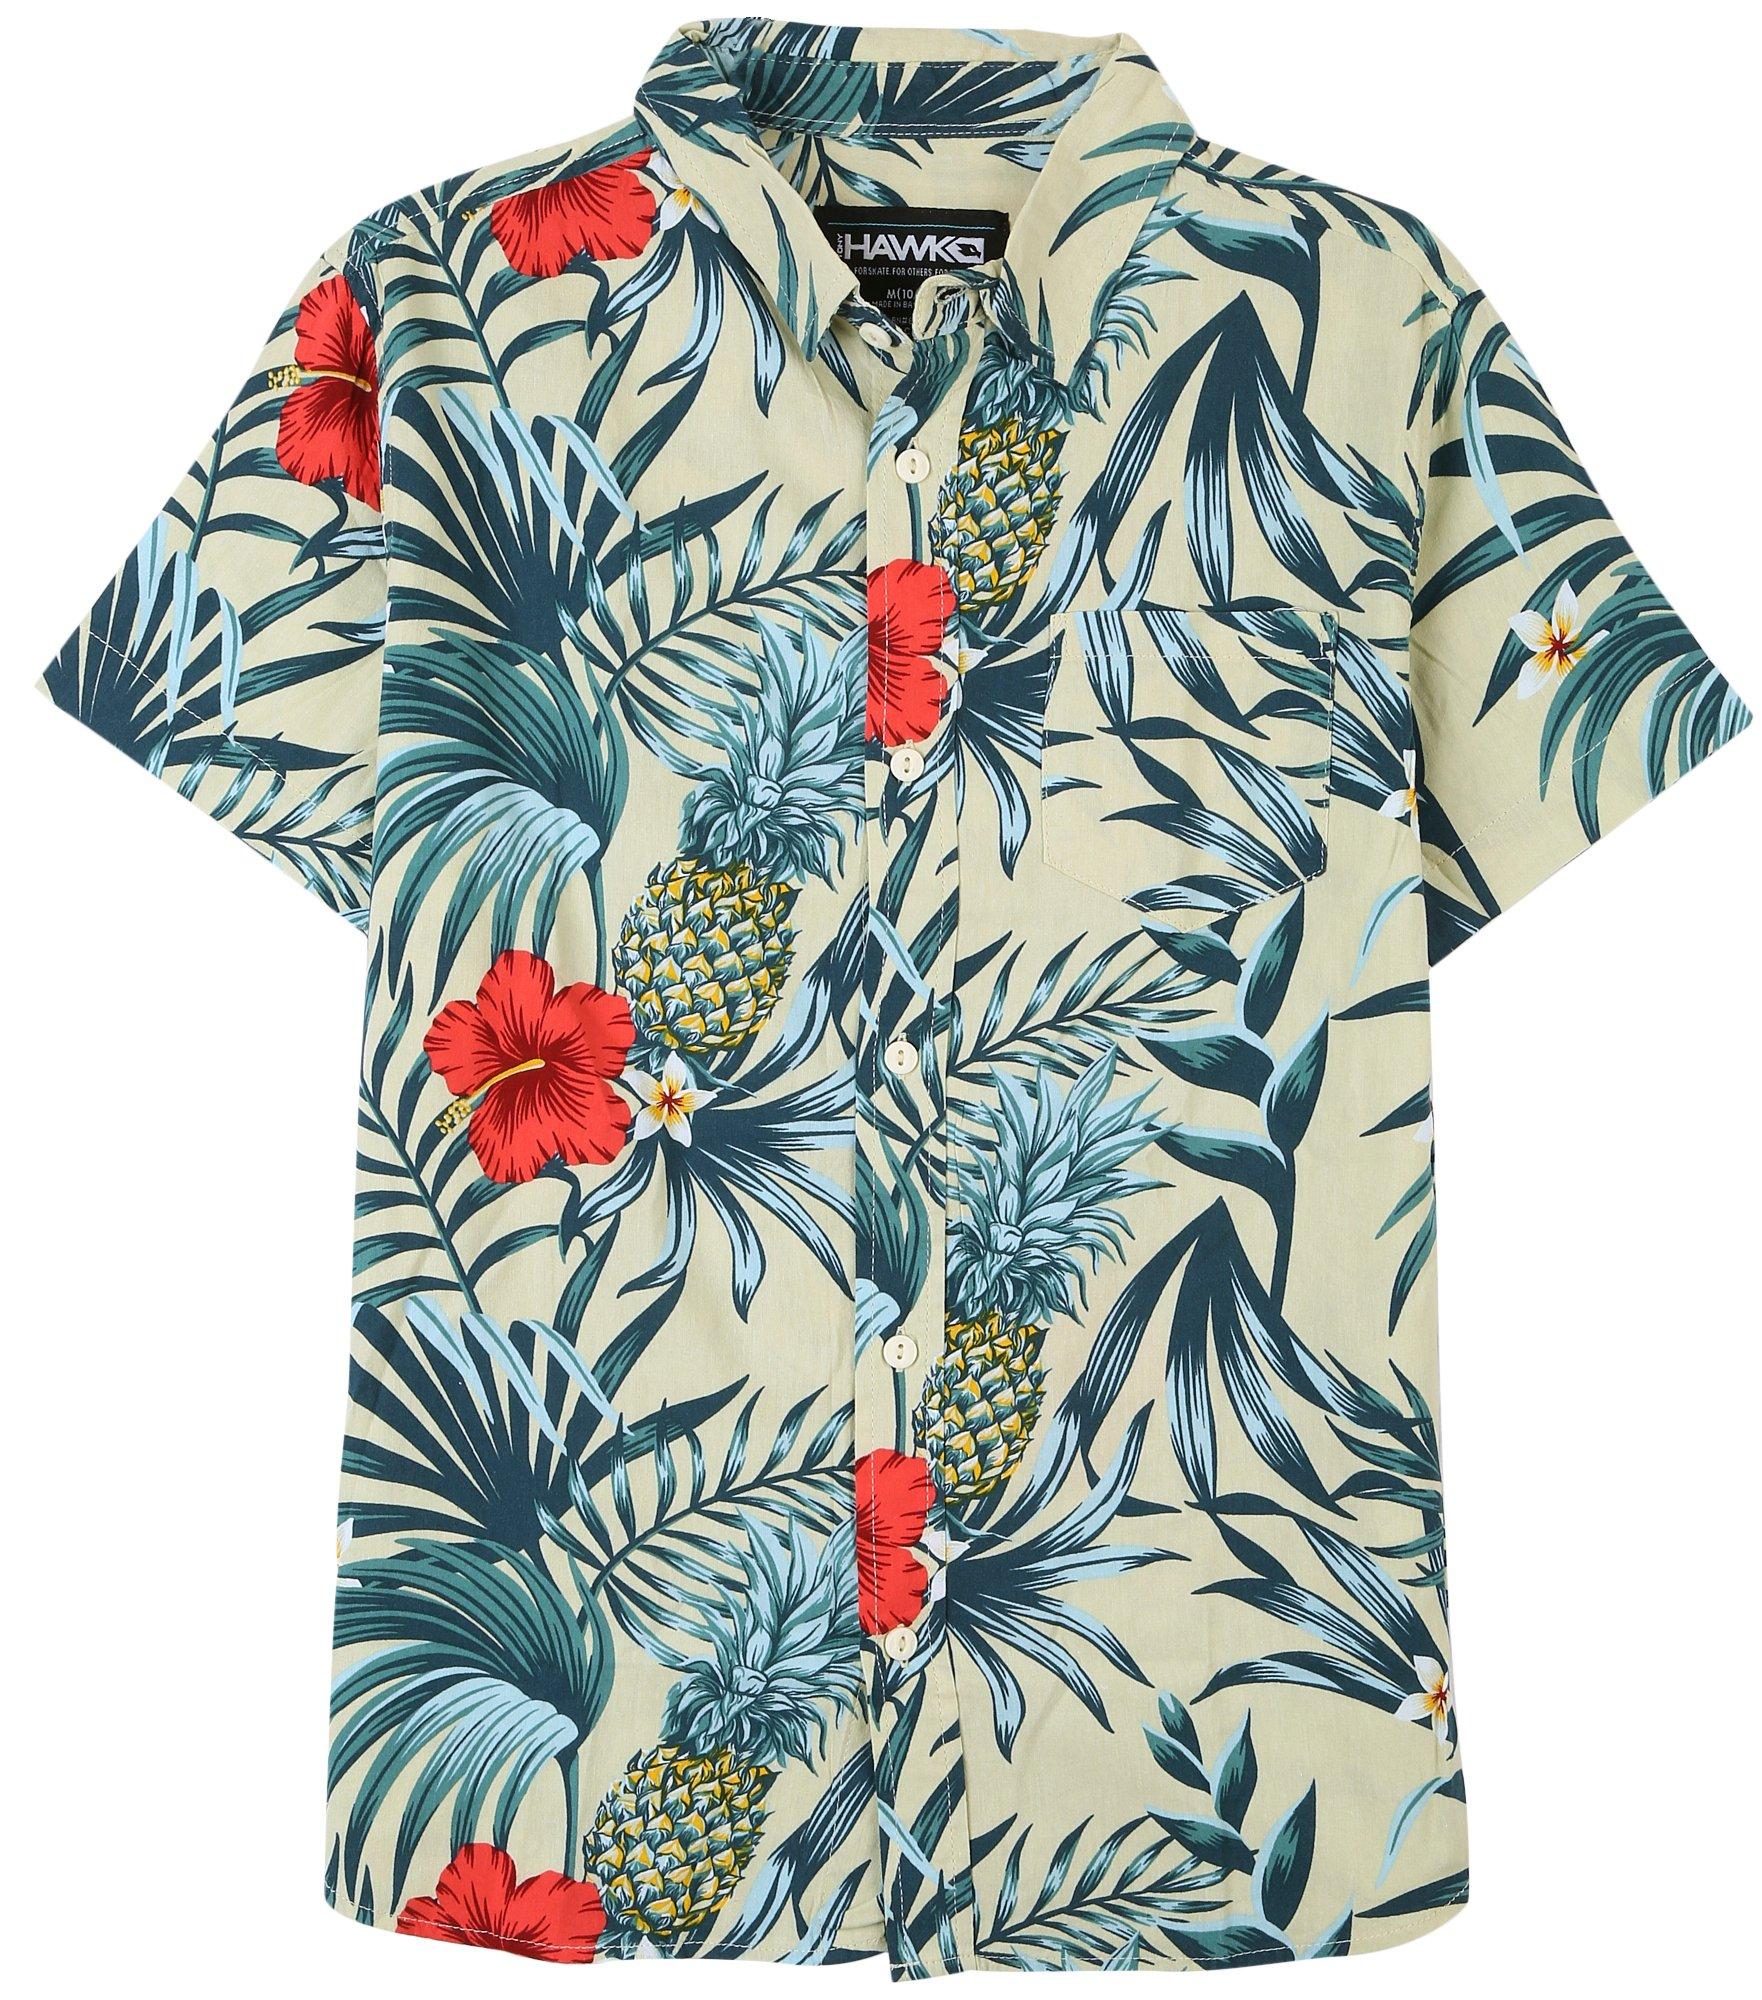 Big Boys Tropical Button Down Shirt